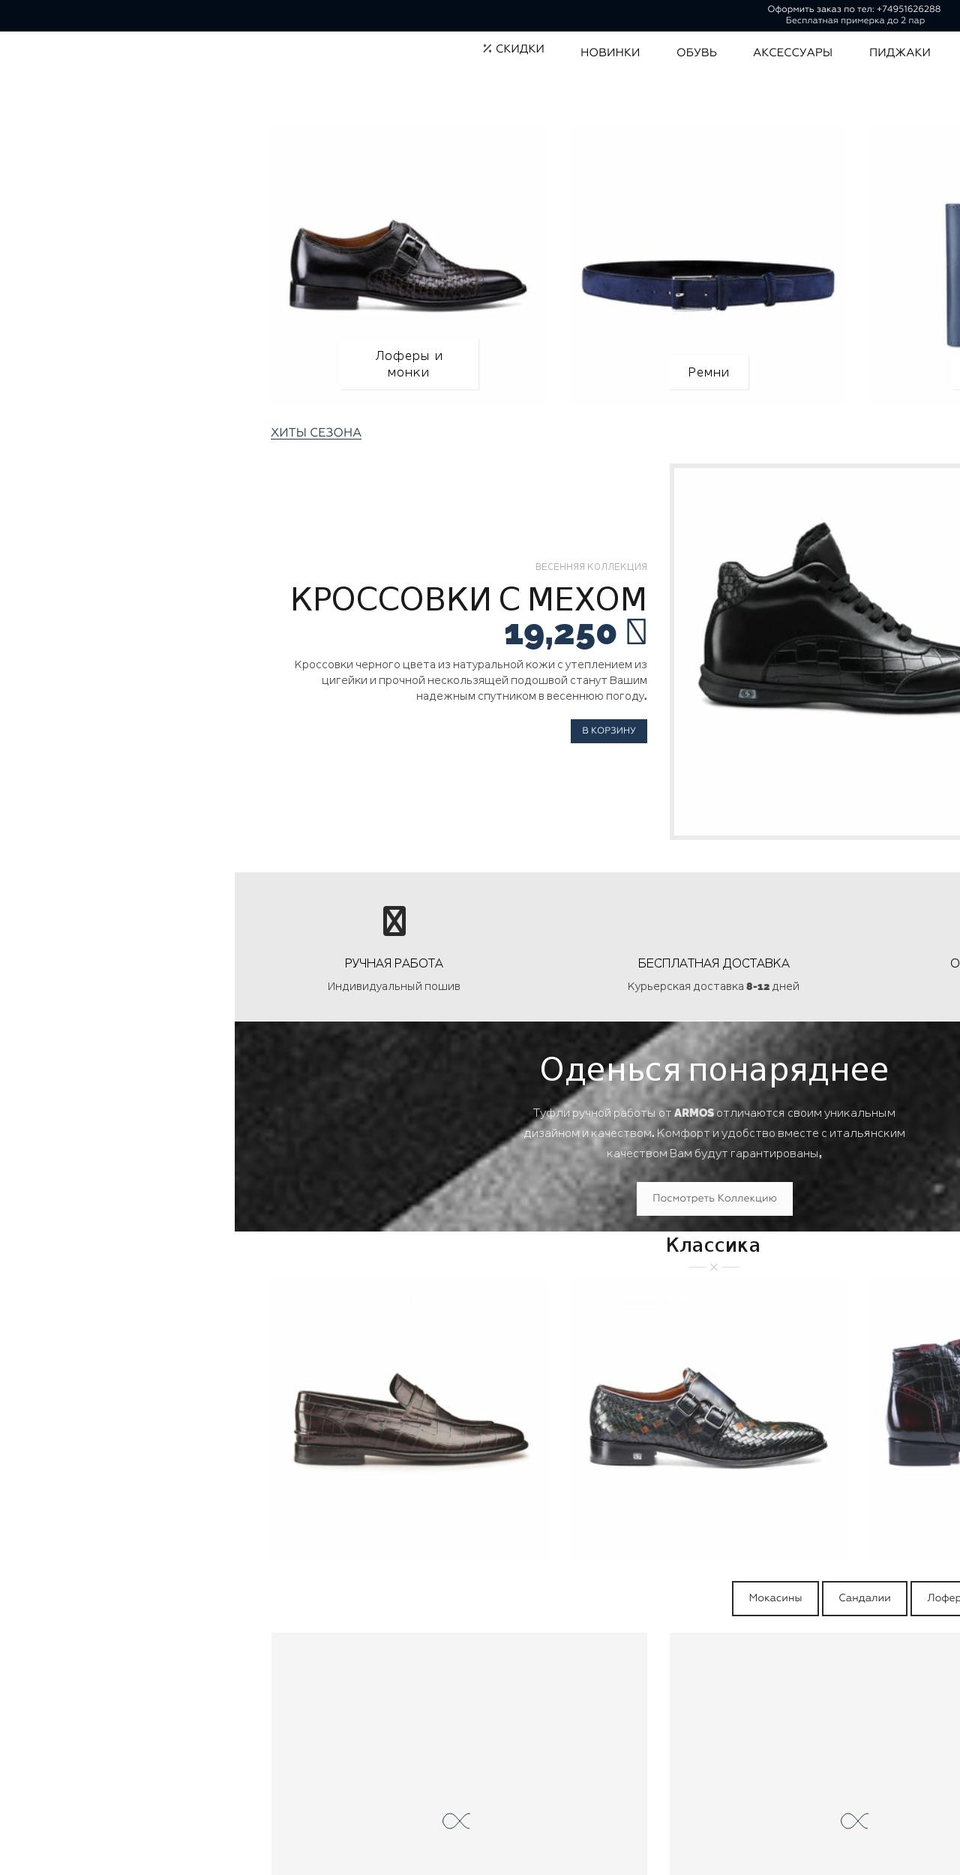 armosshoes.ru shopify website screenshot